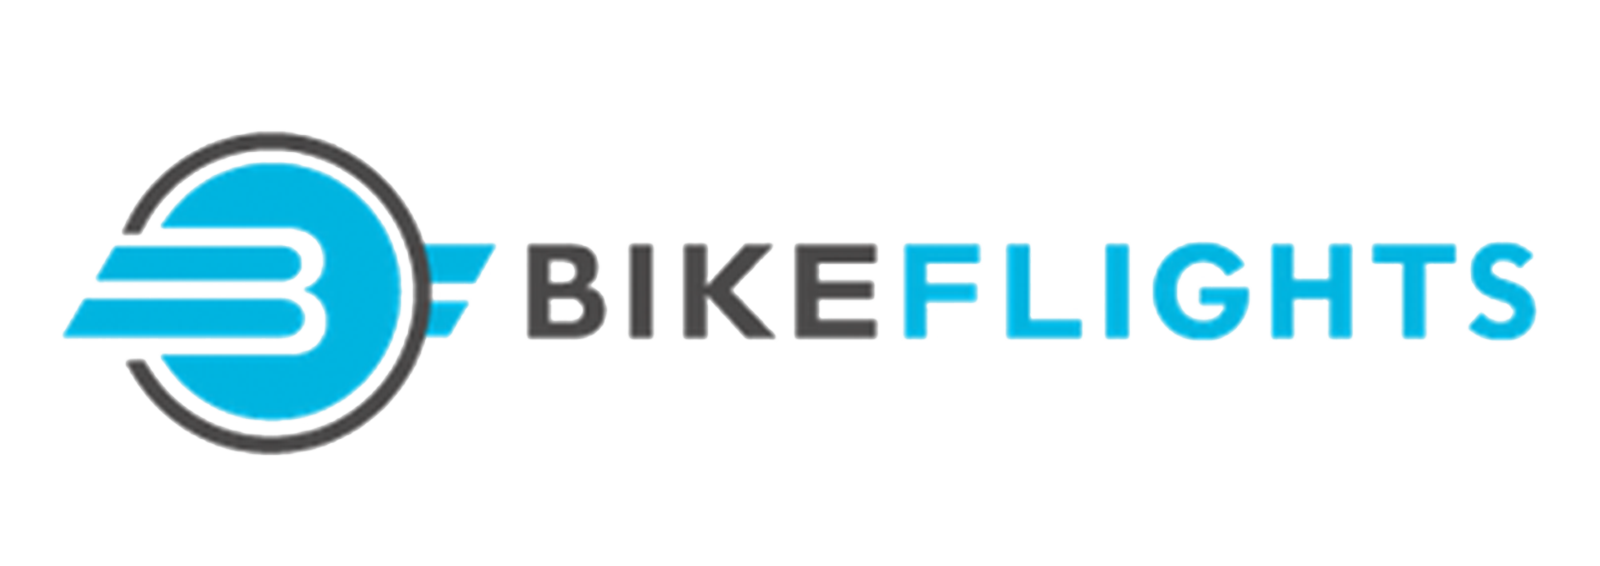 Image of Bike Flights logo